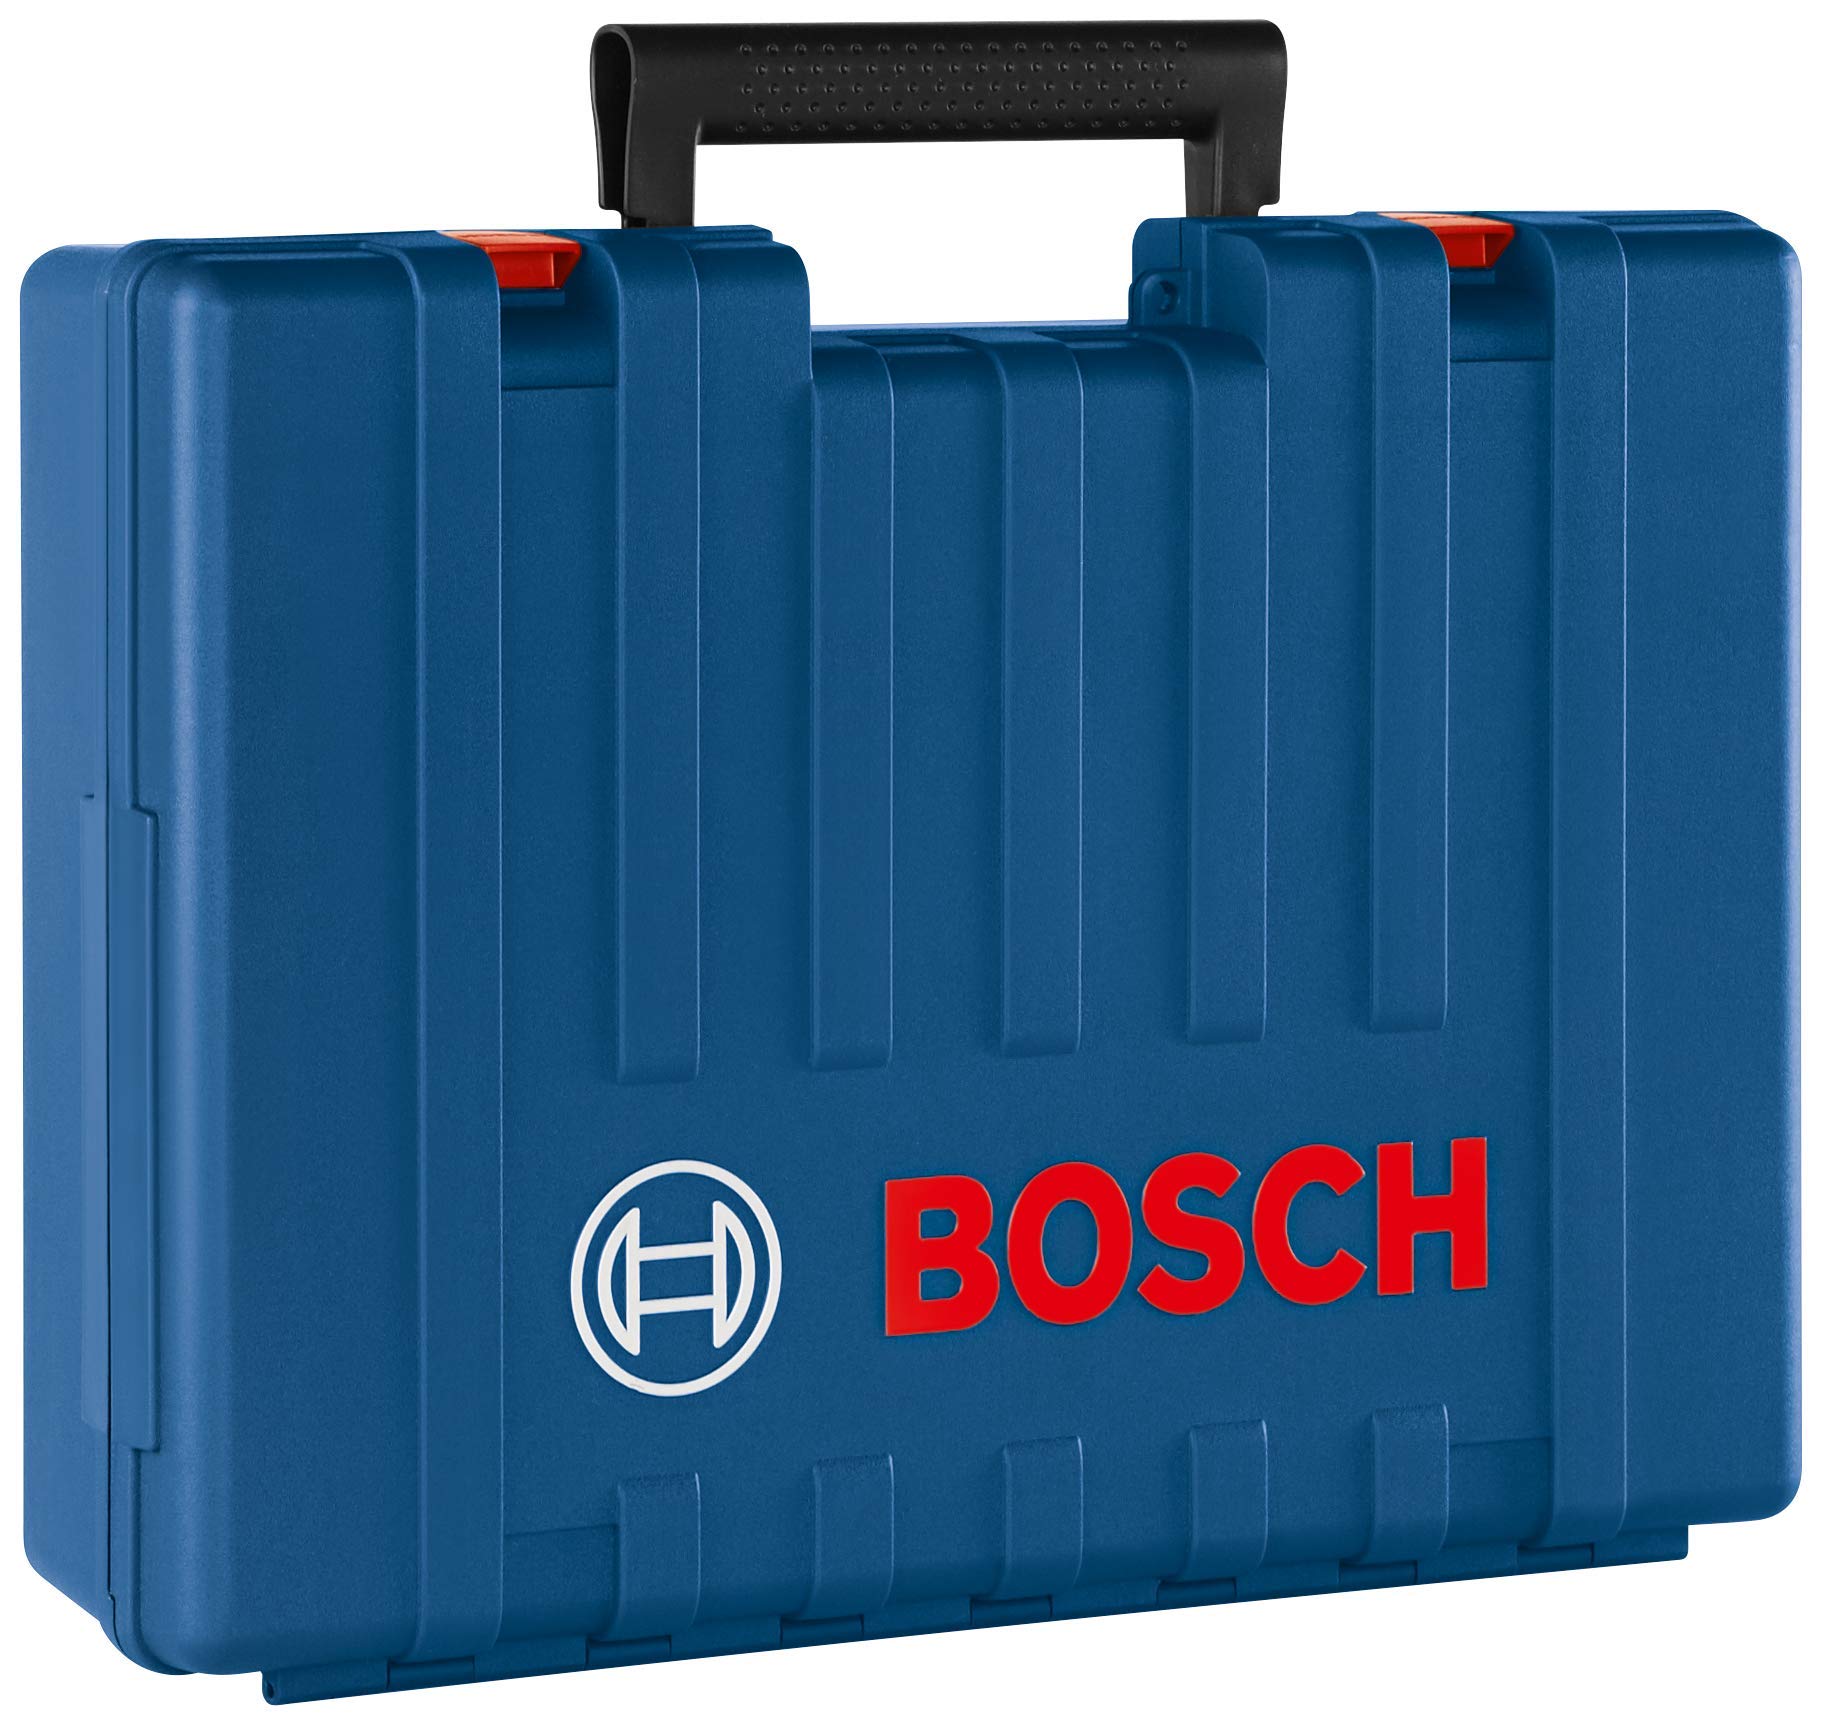 BOSCH 1-1/8-Inch SDS Rotary Hammer RH328VC with Vibration Control, Bosch Blue